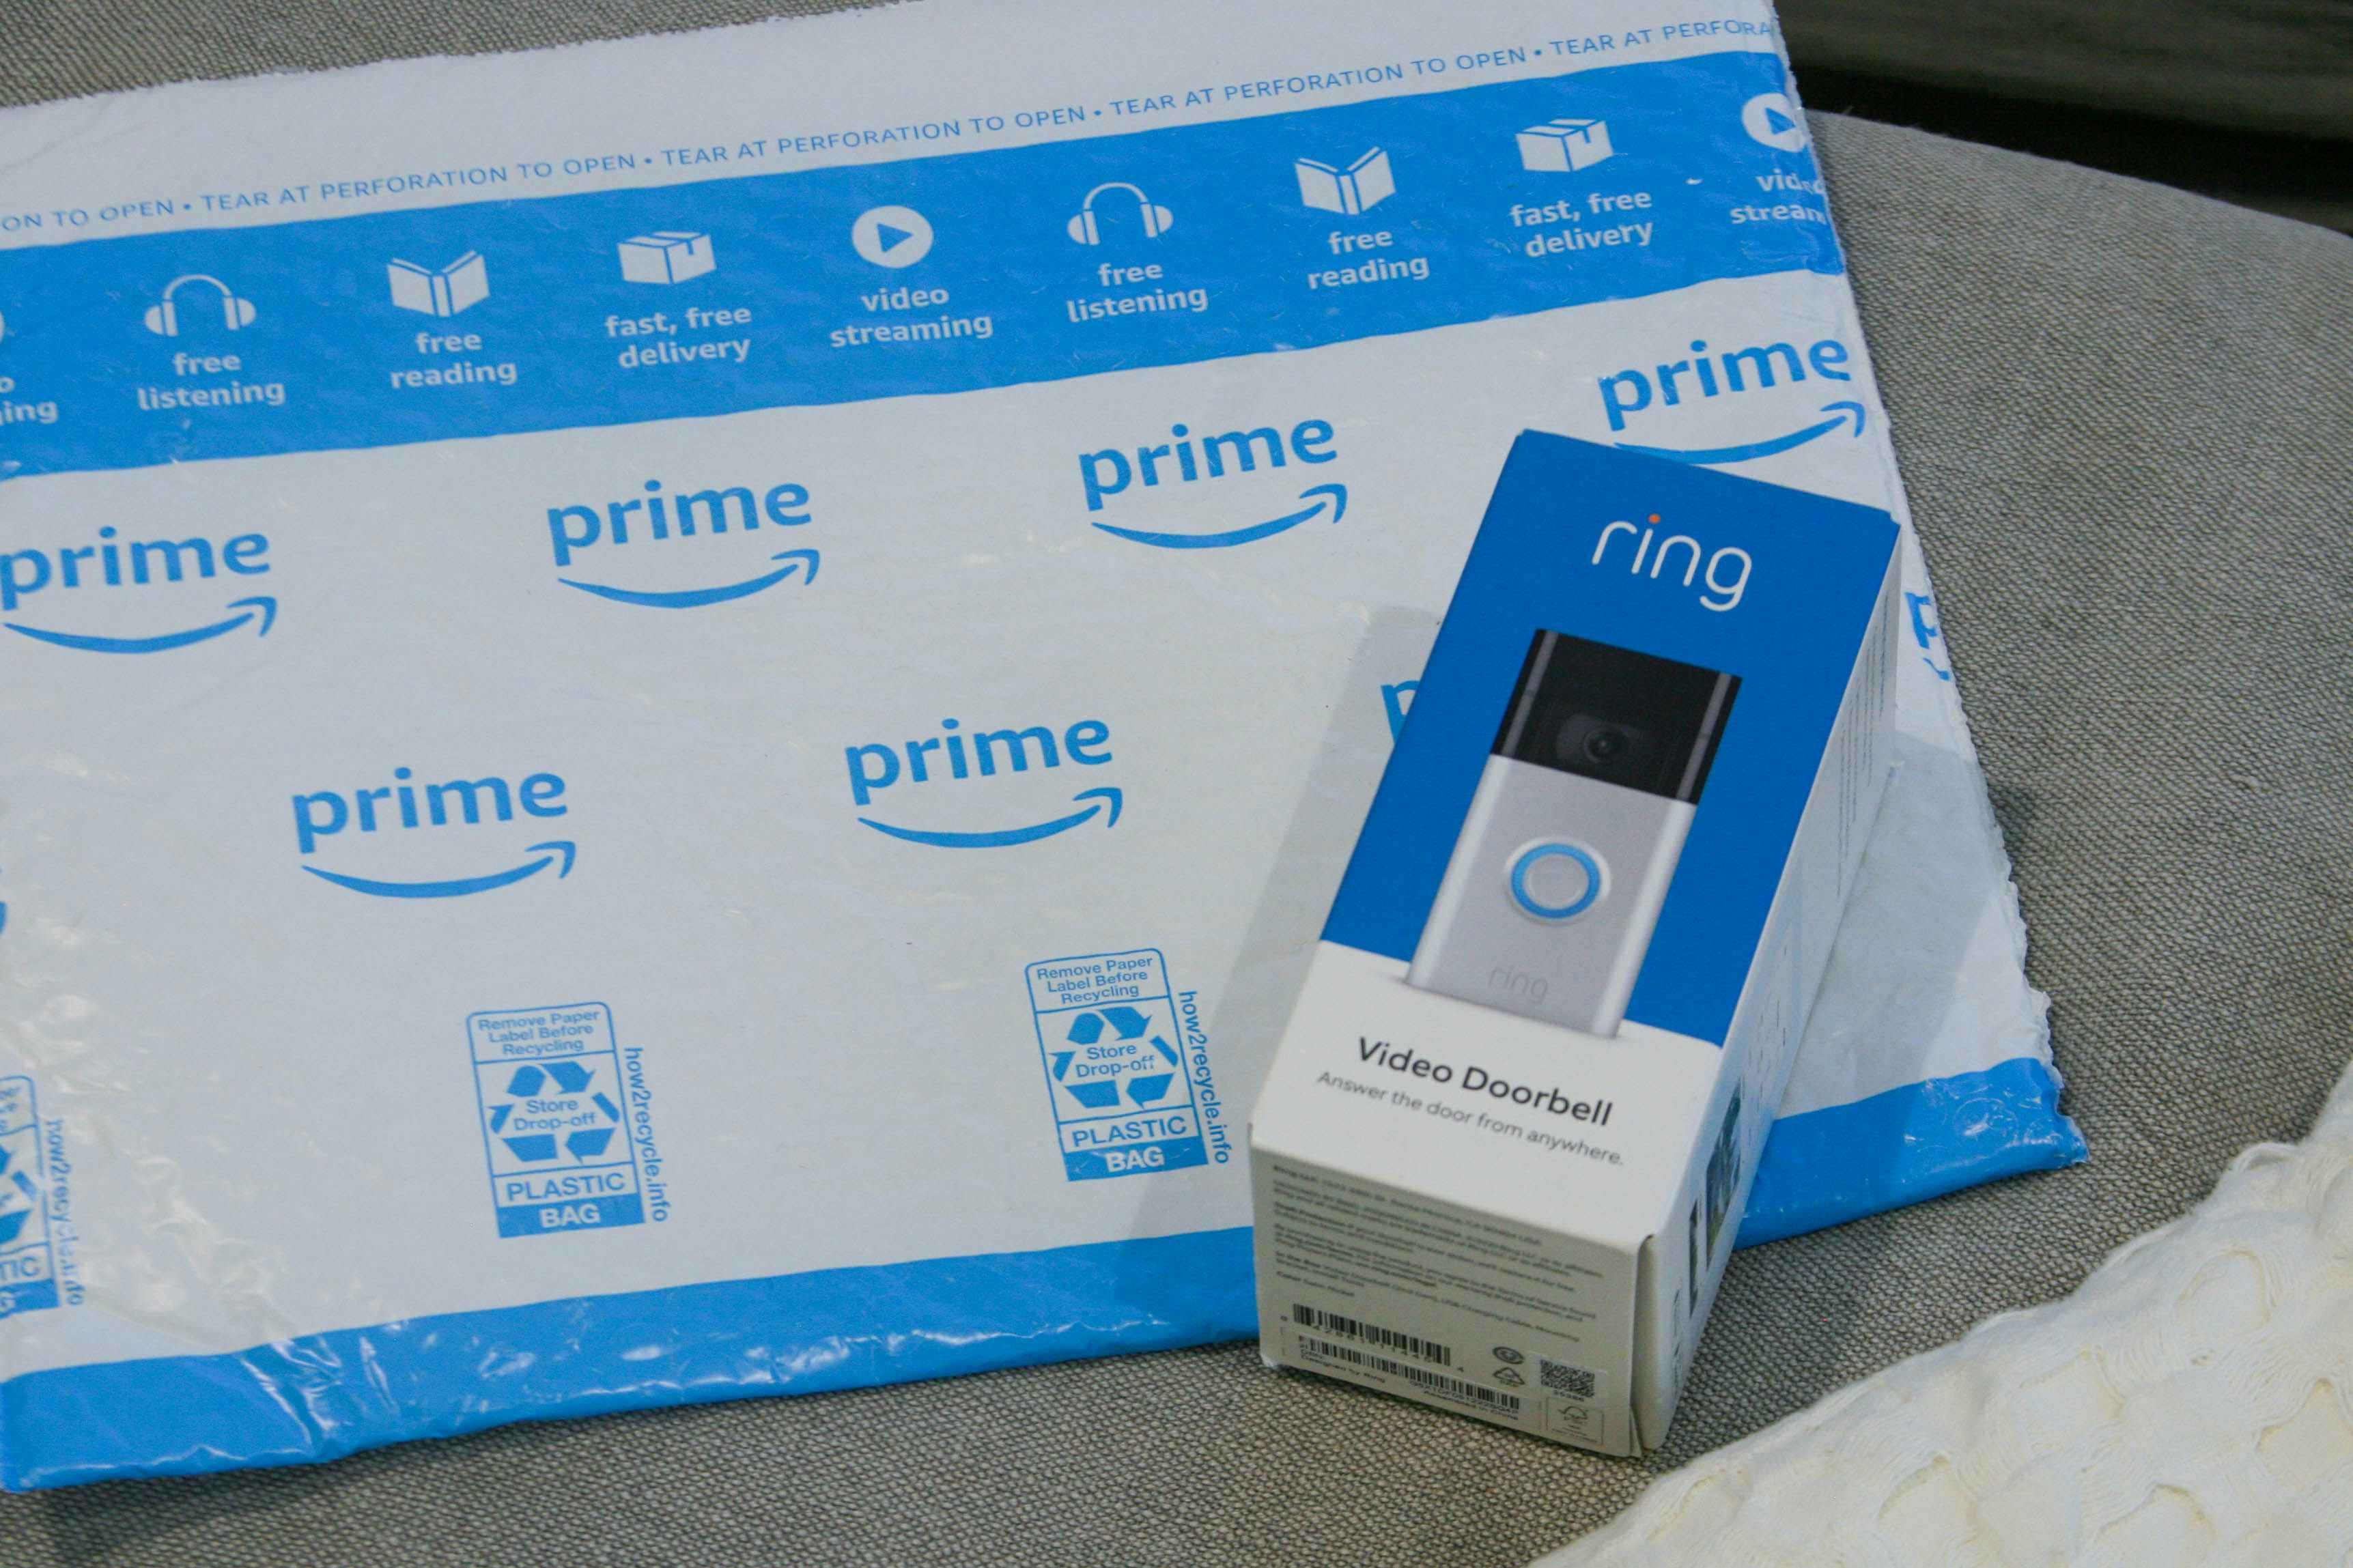 ring video doorbell next to prime packaging